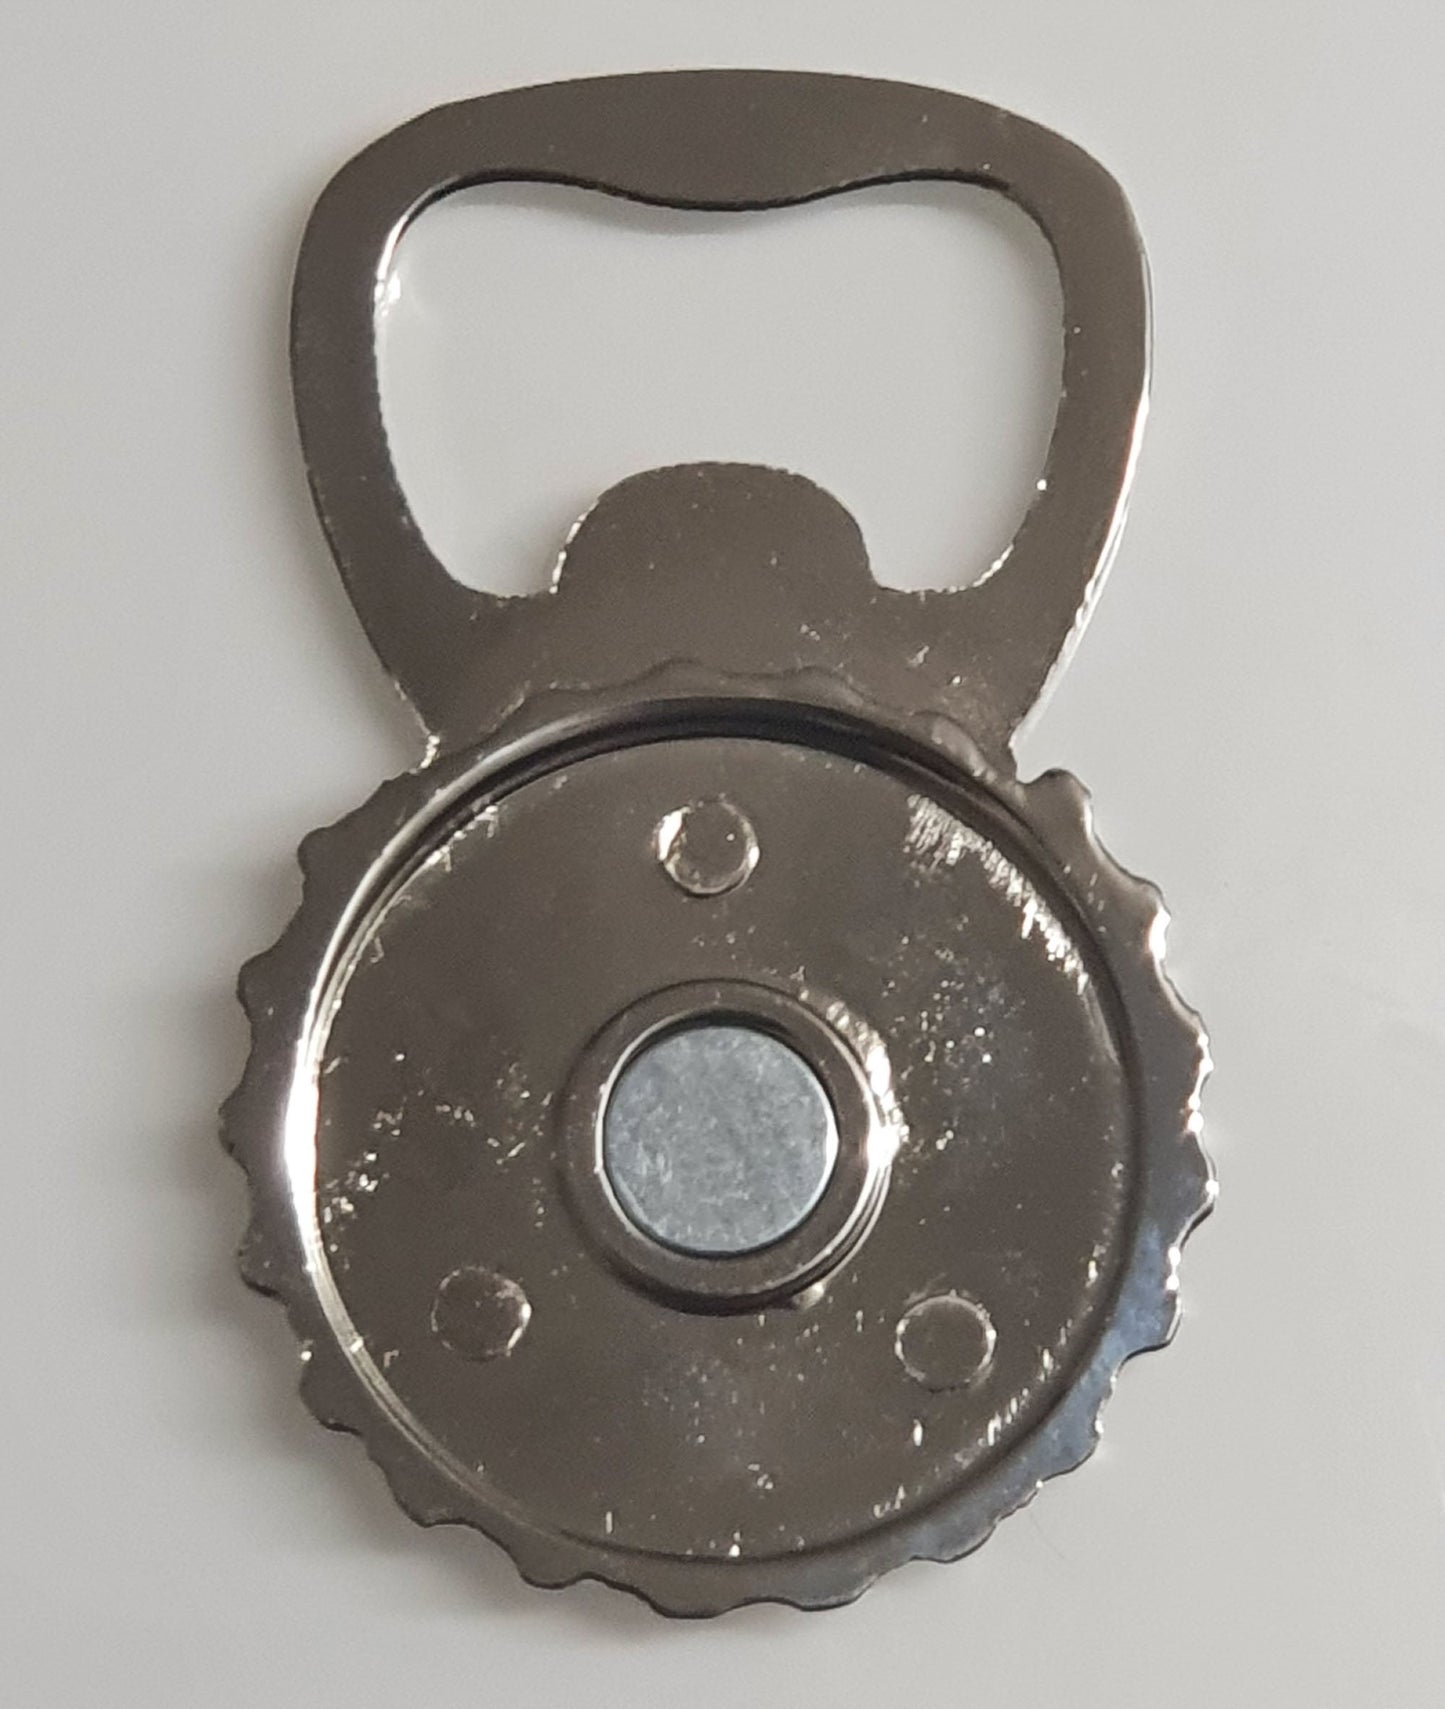 Luton 1984-87 Third Shirt Memorabilia Metal Bottle Opener Fridge Magnet